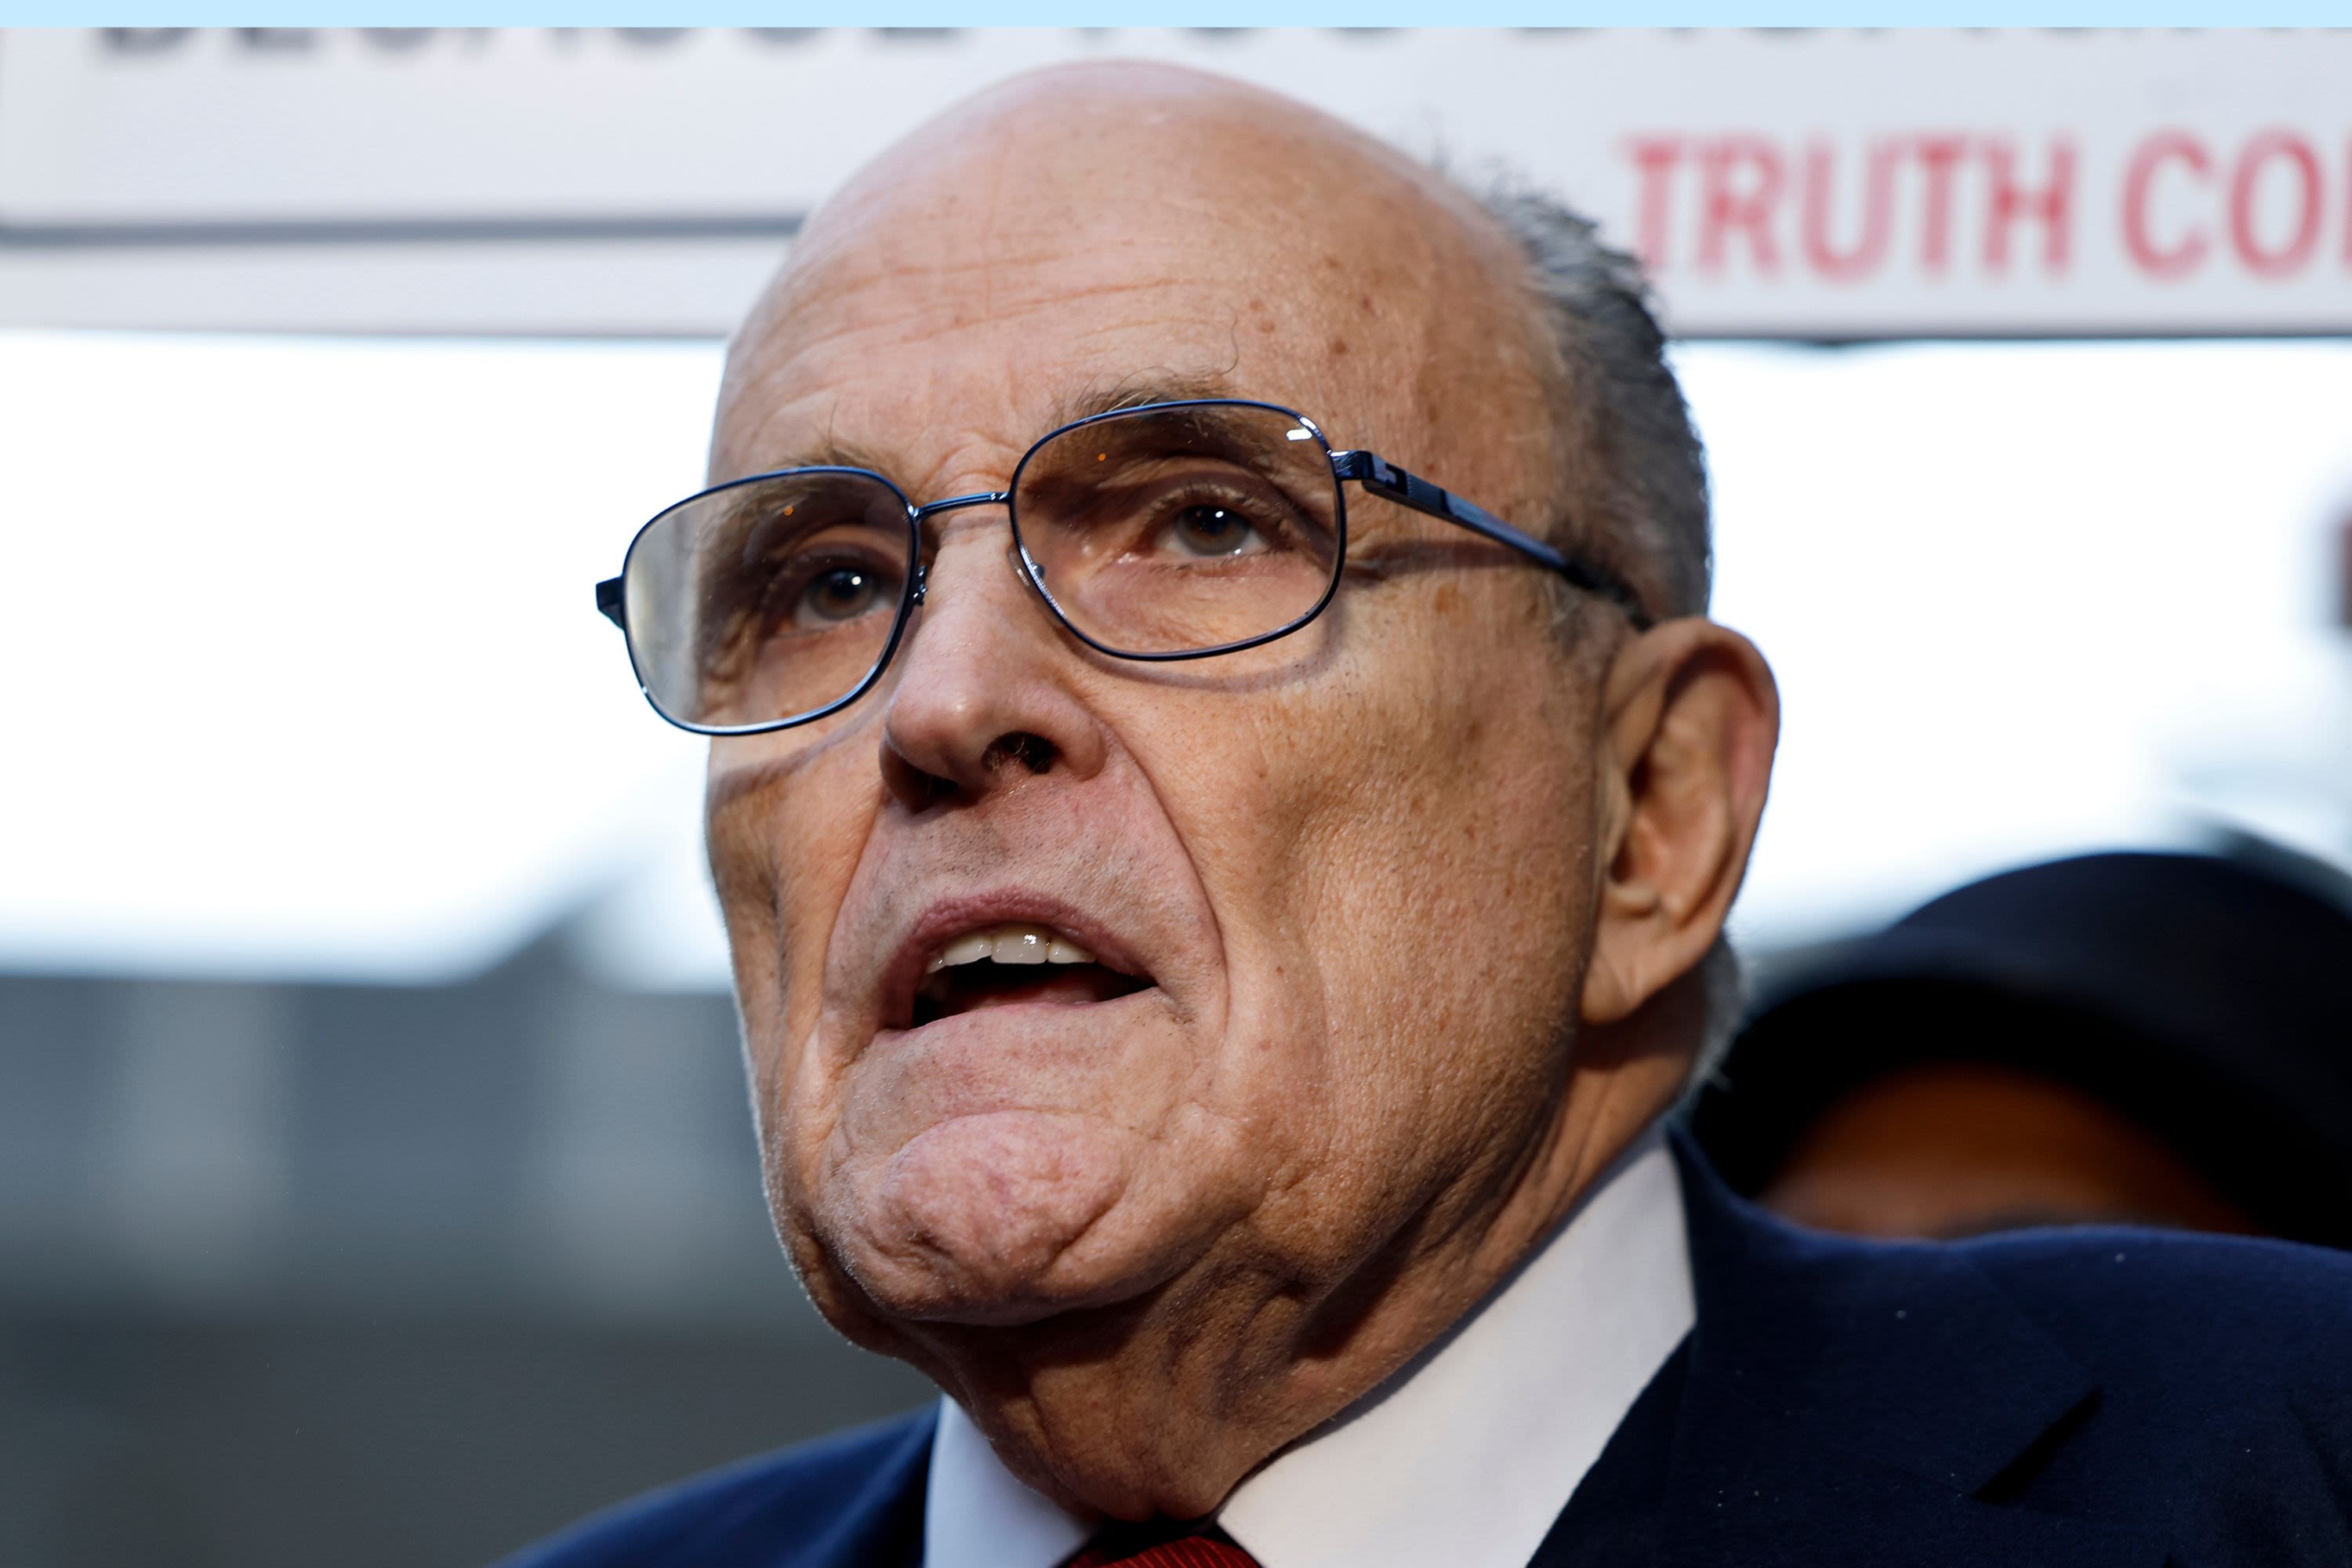 Rudy Giuliani's subpoena claim shot down by Arizona attorney general